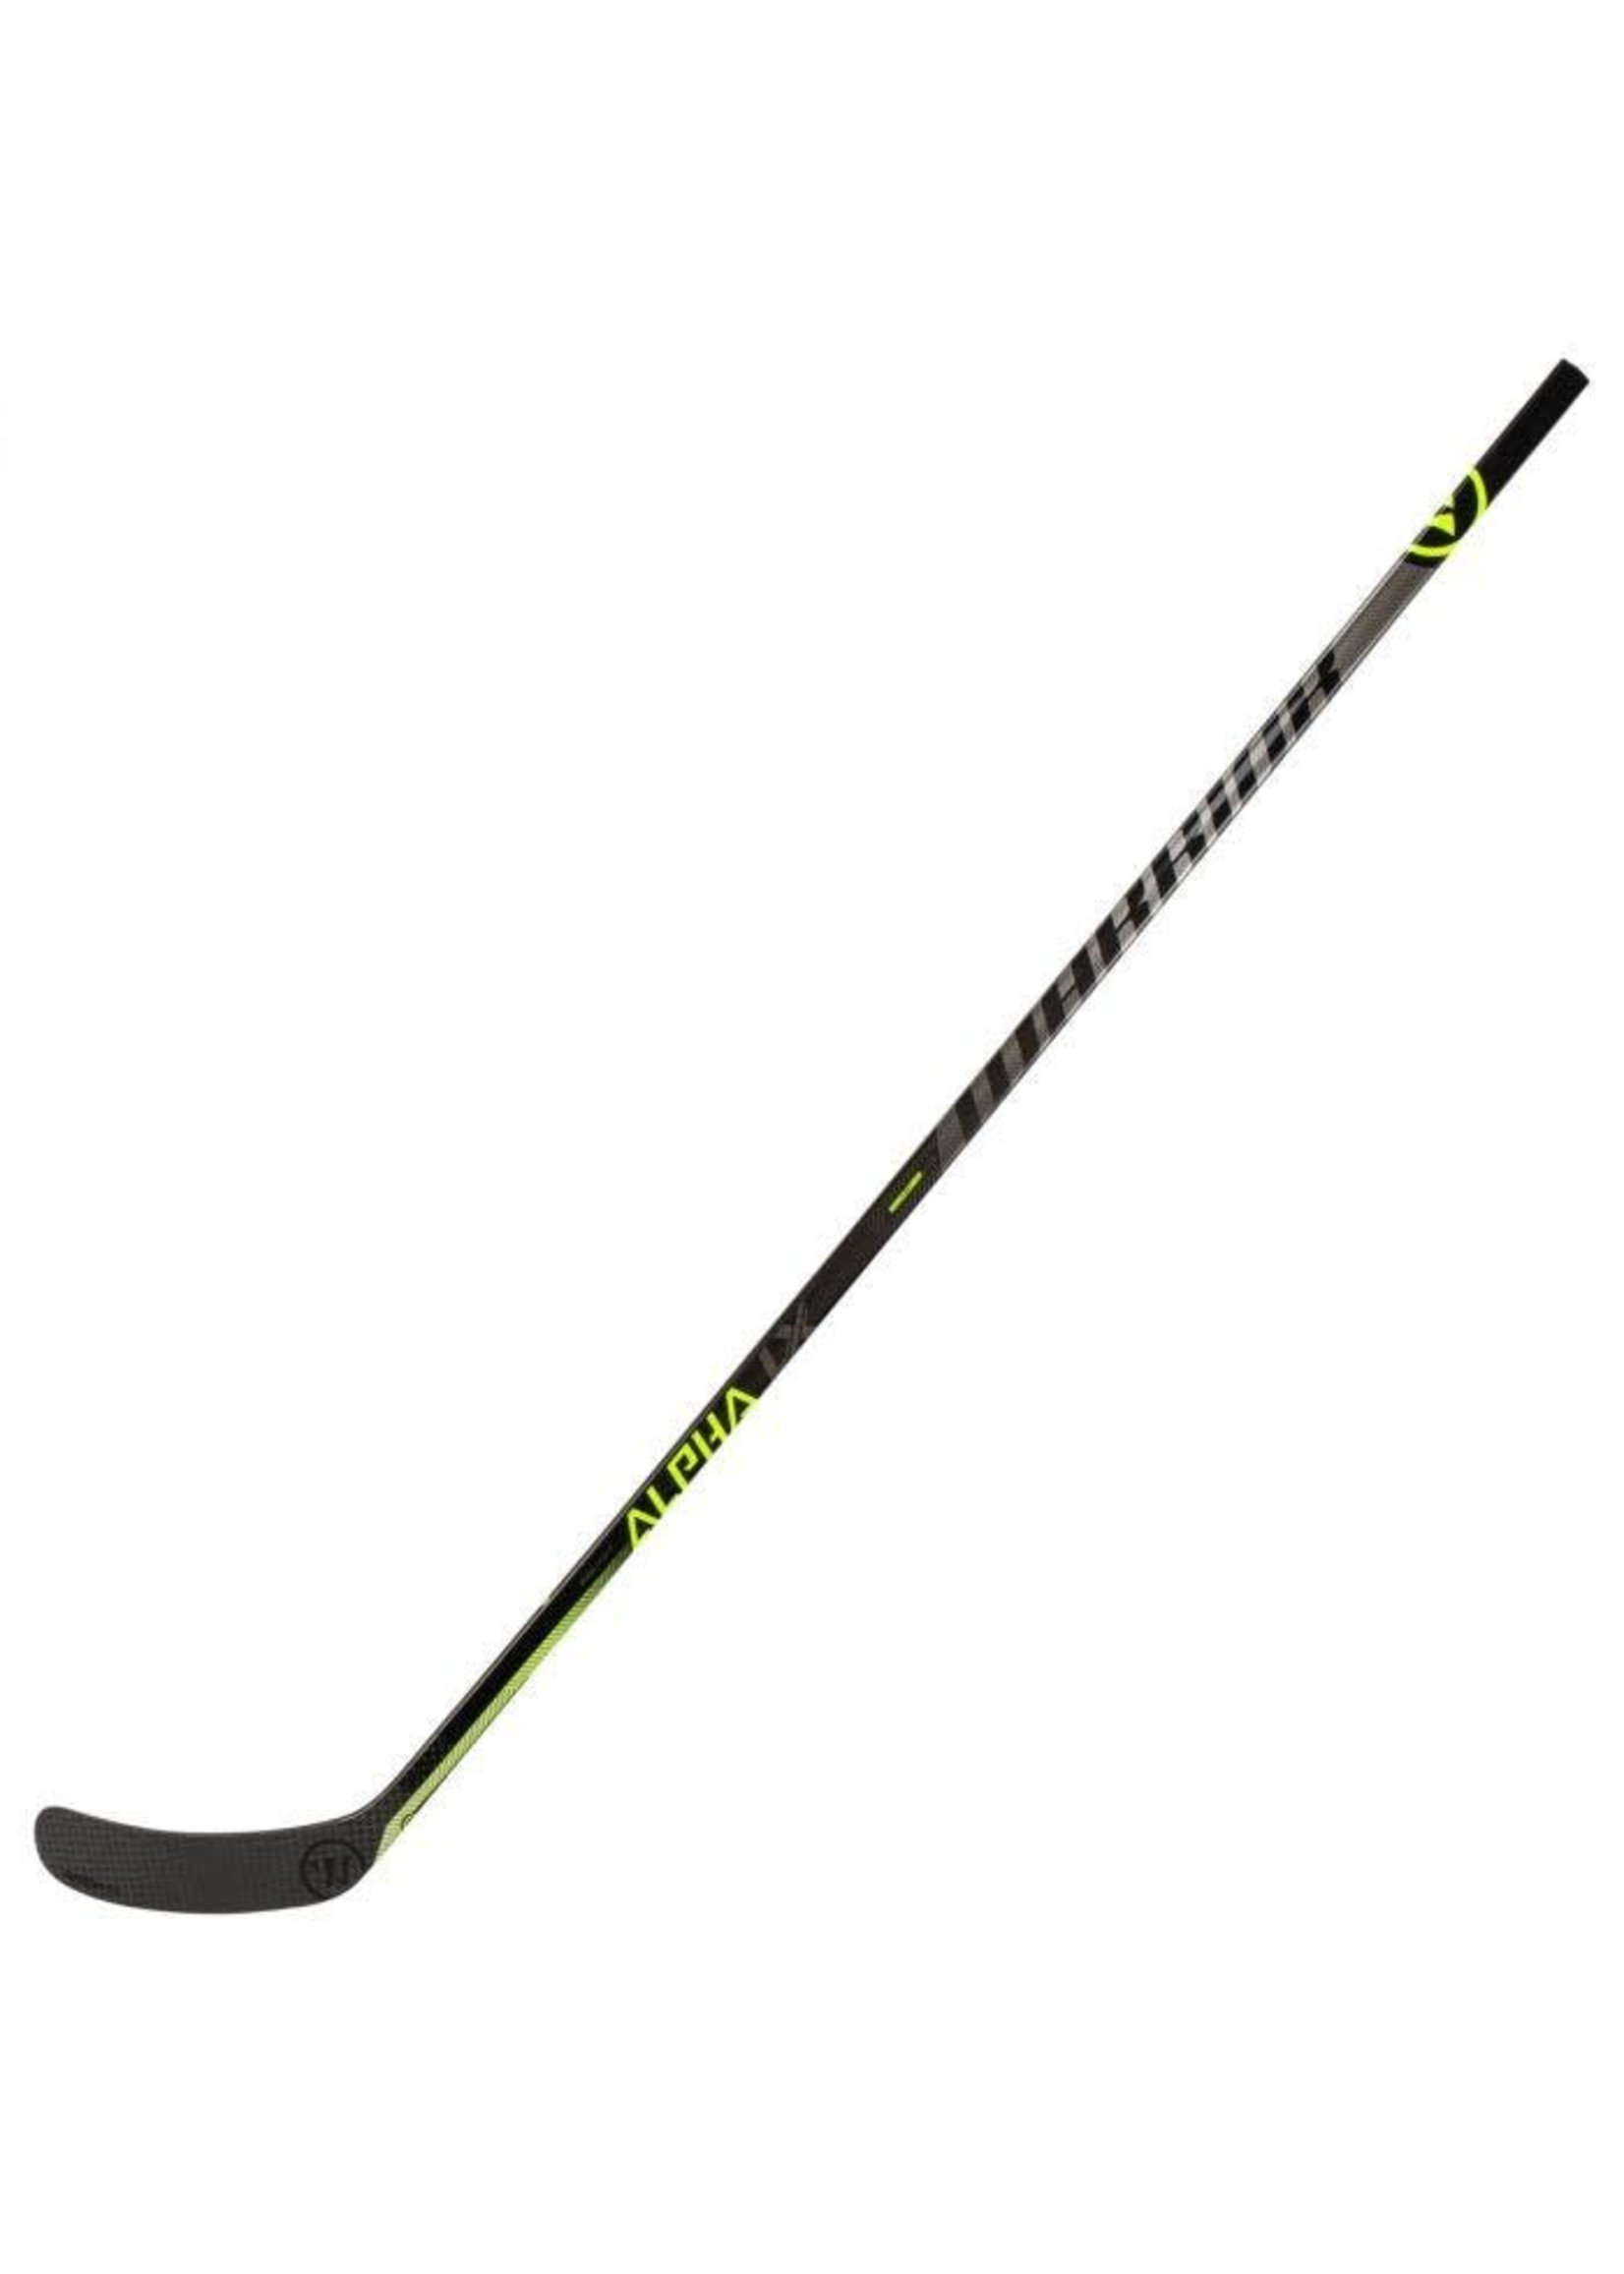 Warrior Hockey Warrior Alpha LX 20 Stick - Senior / Intermediate